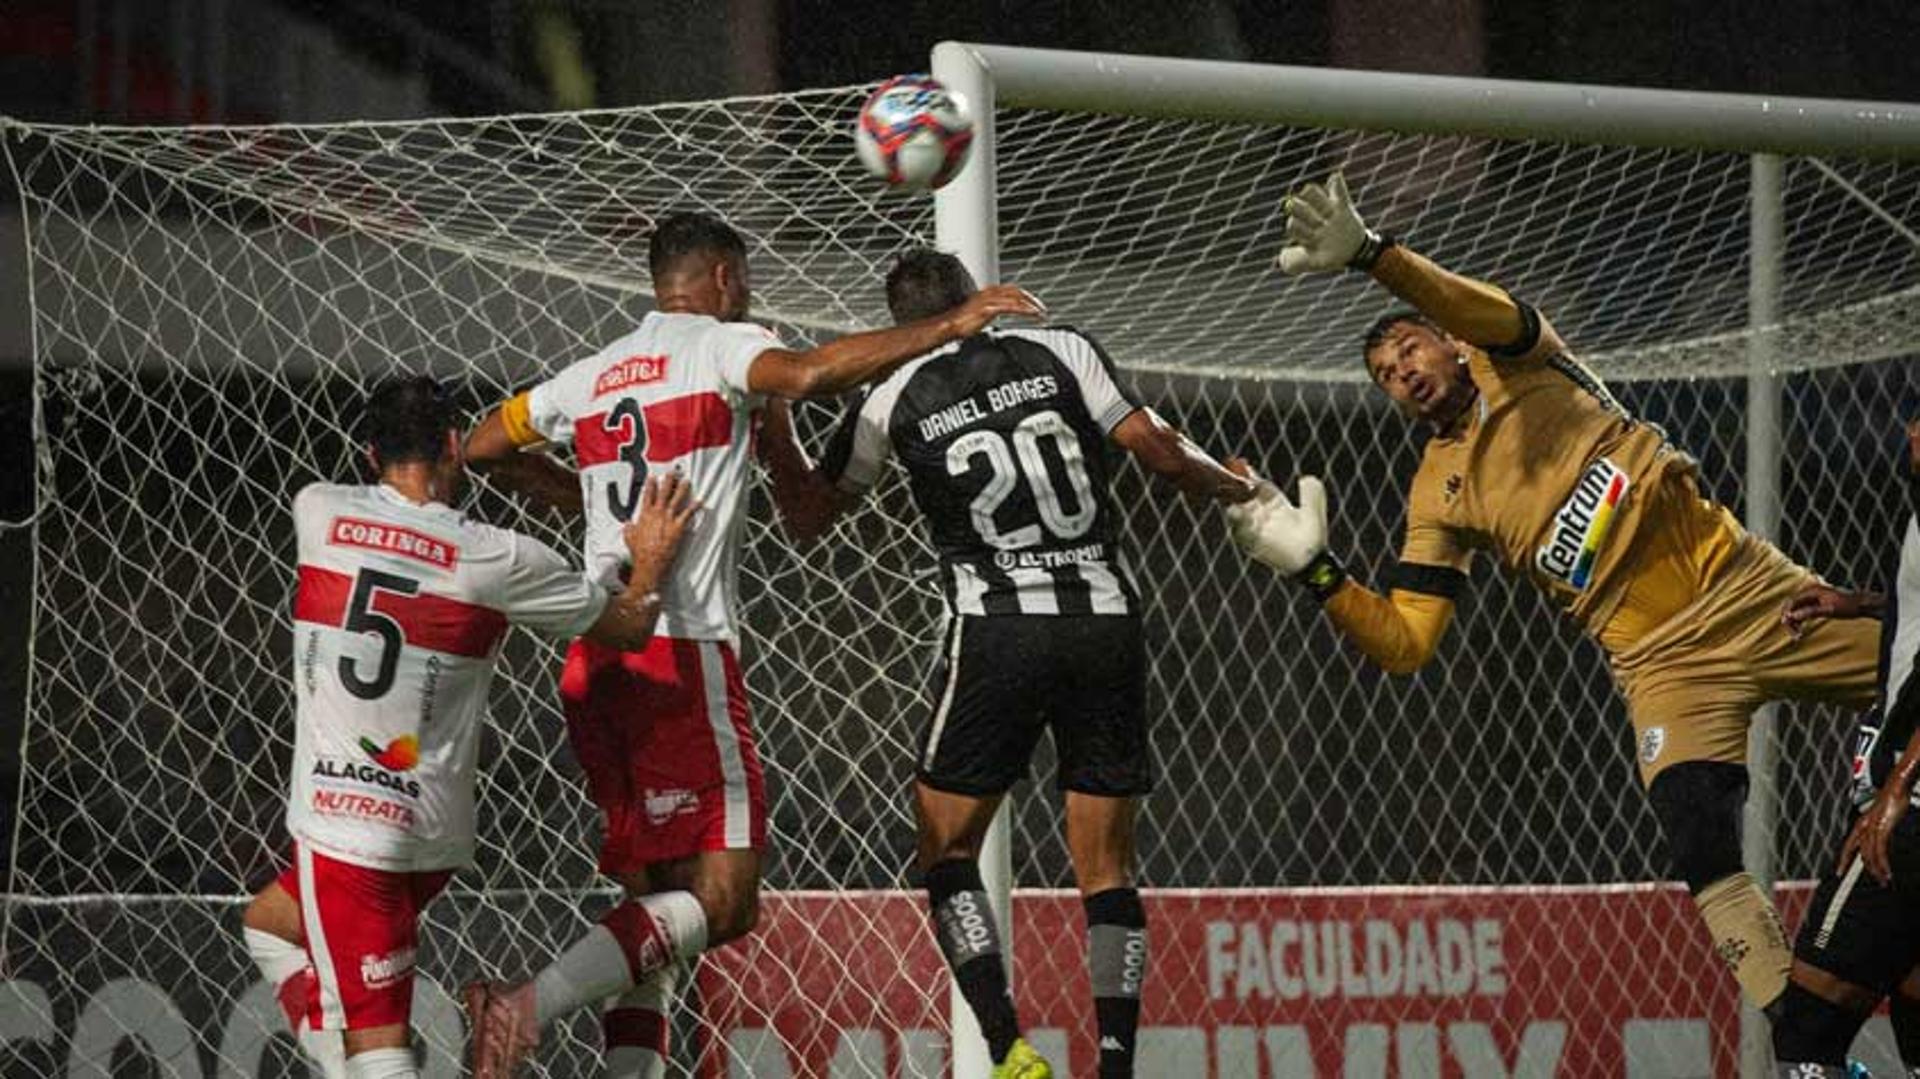 CRB x Botafogo